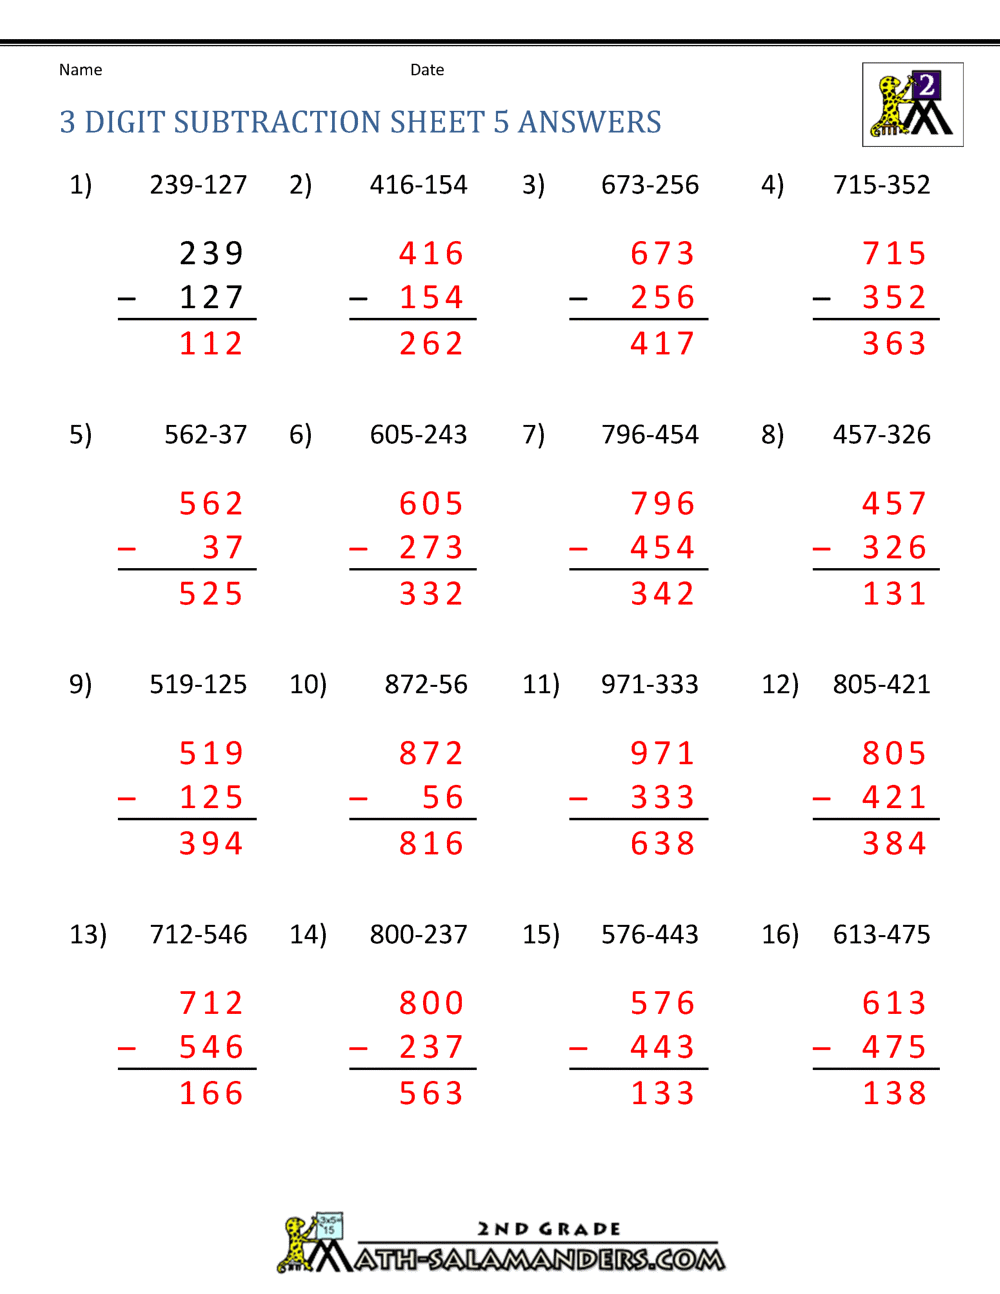 three-digit-subtraction-worksheets